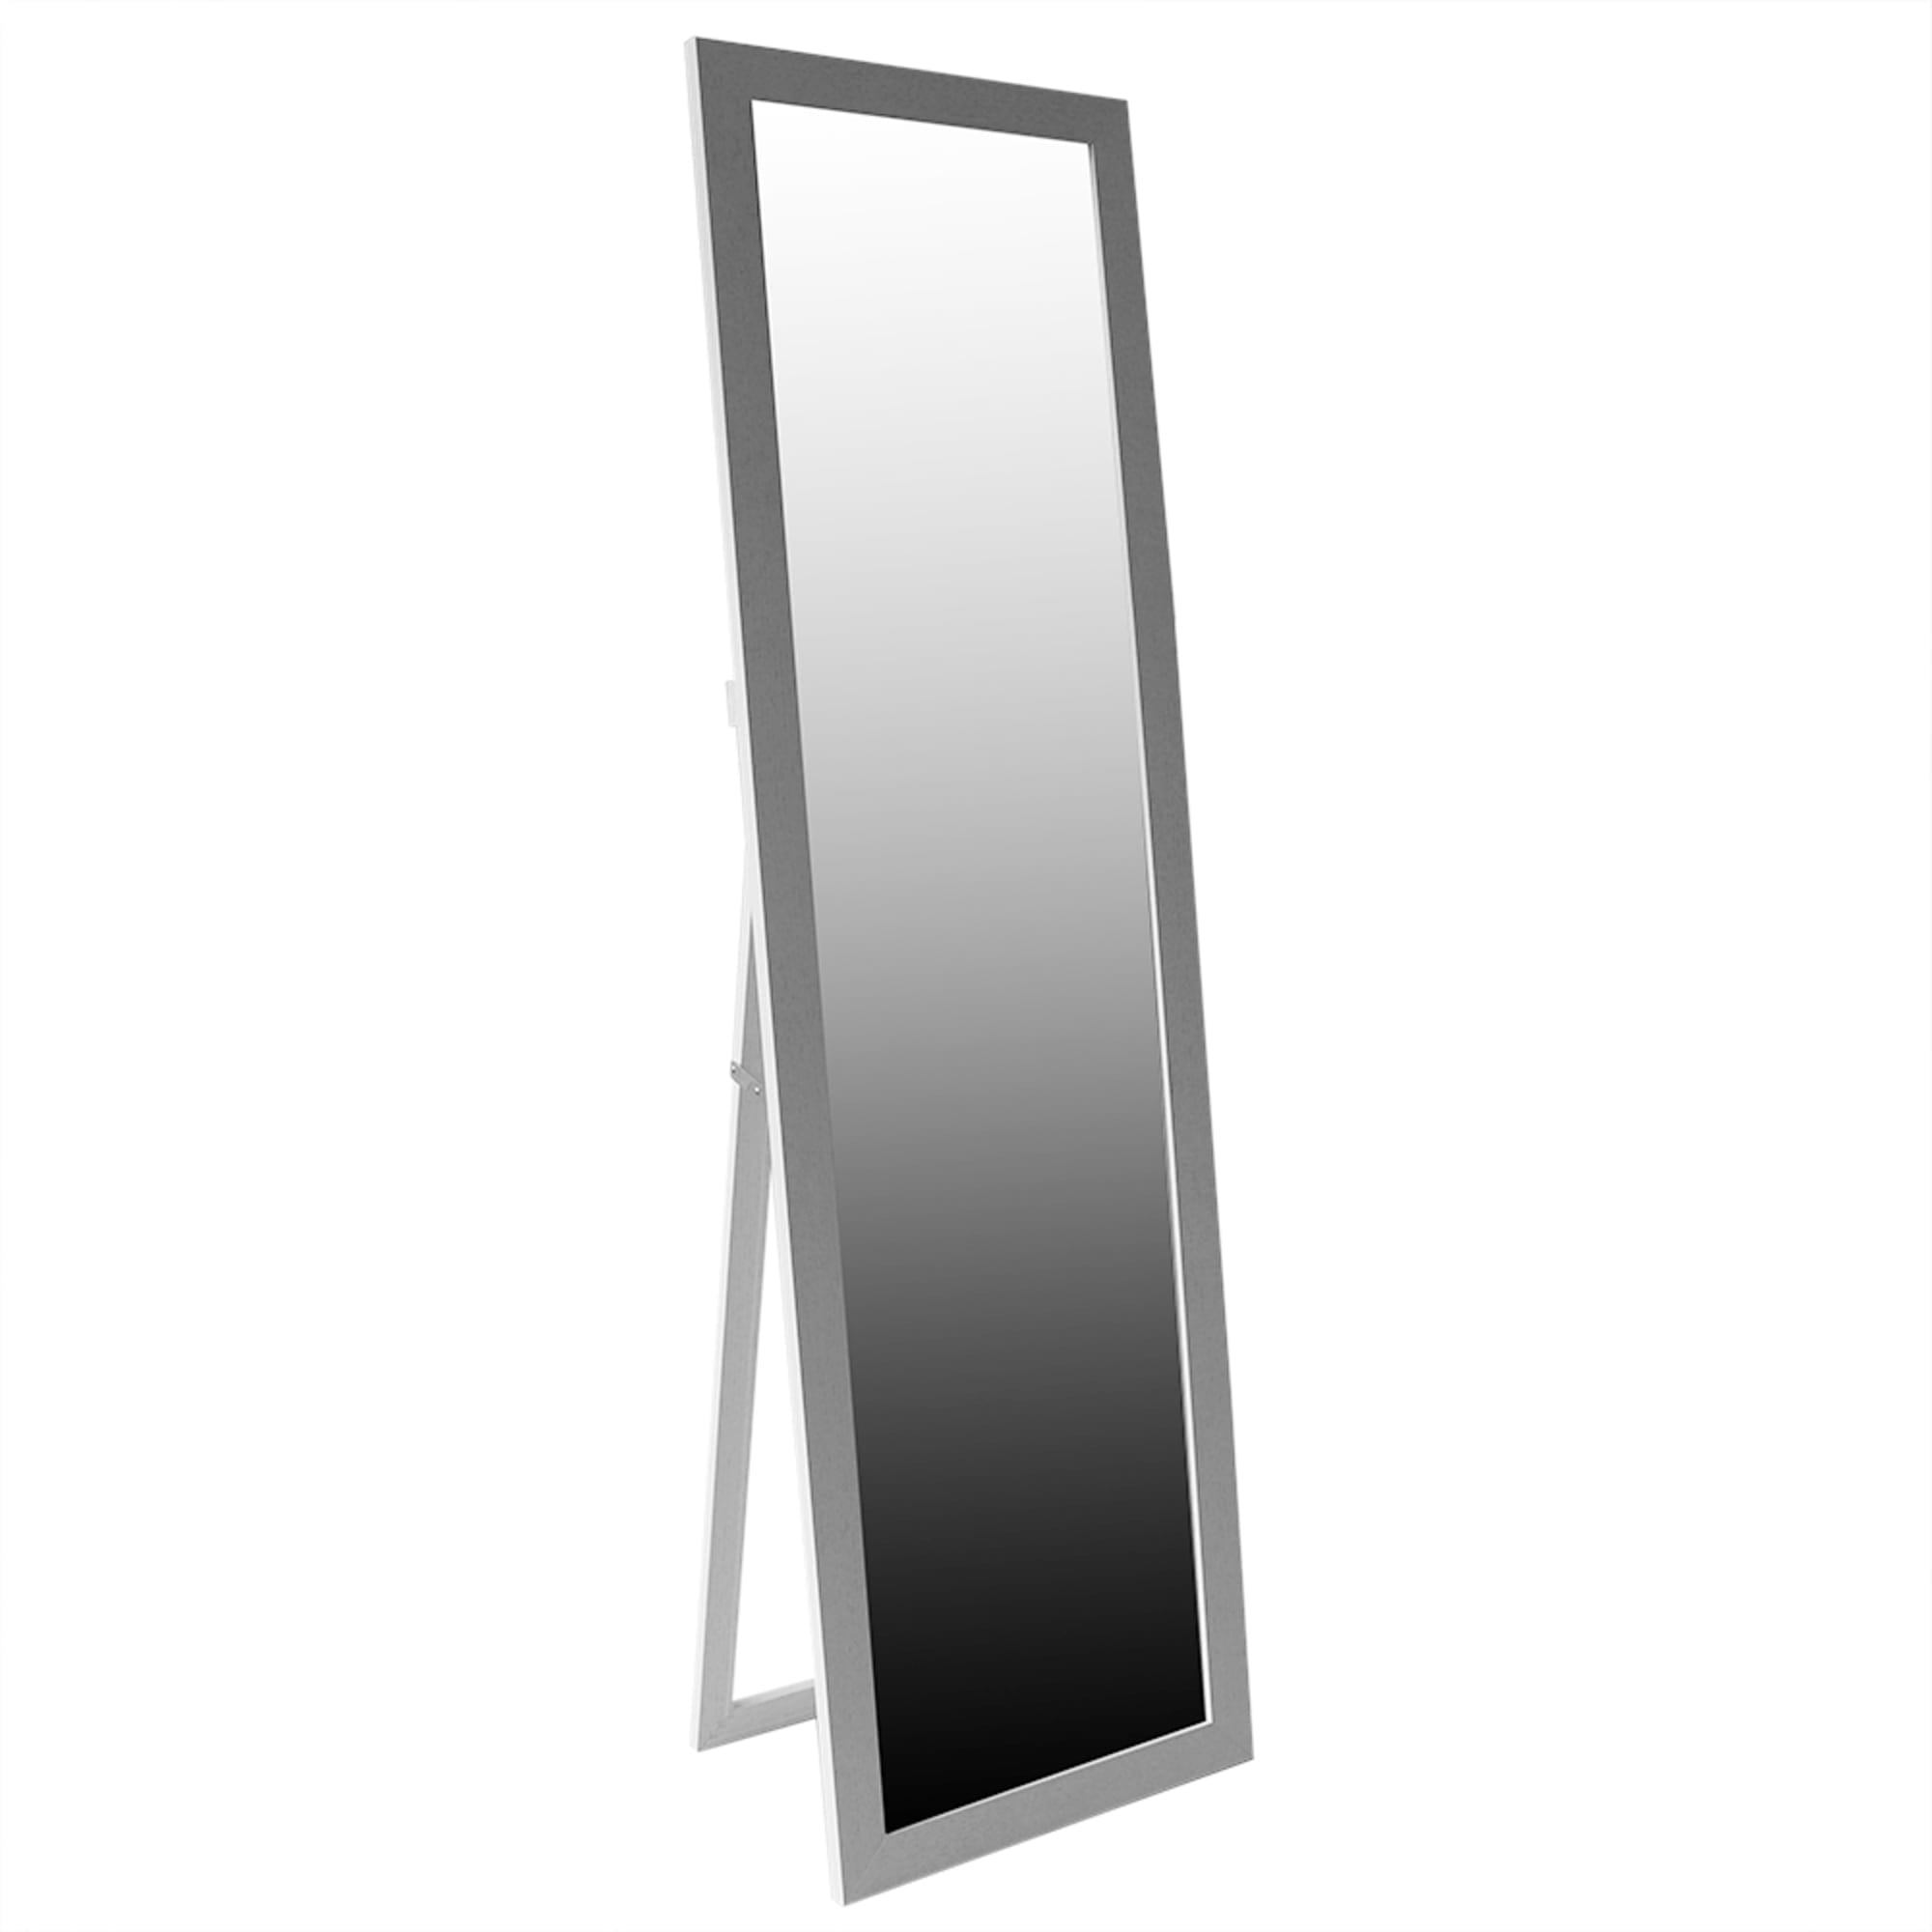 Home Basics Easel Back Full Length Mirror with MDF Frame, White $15.00 EACH, CASE PACK OF 6